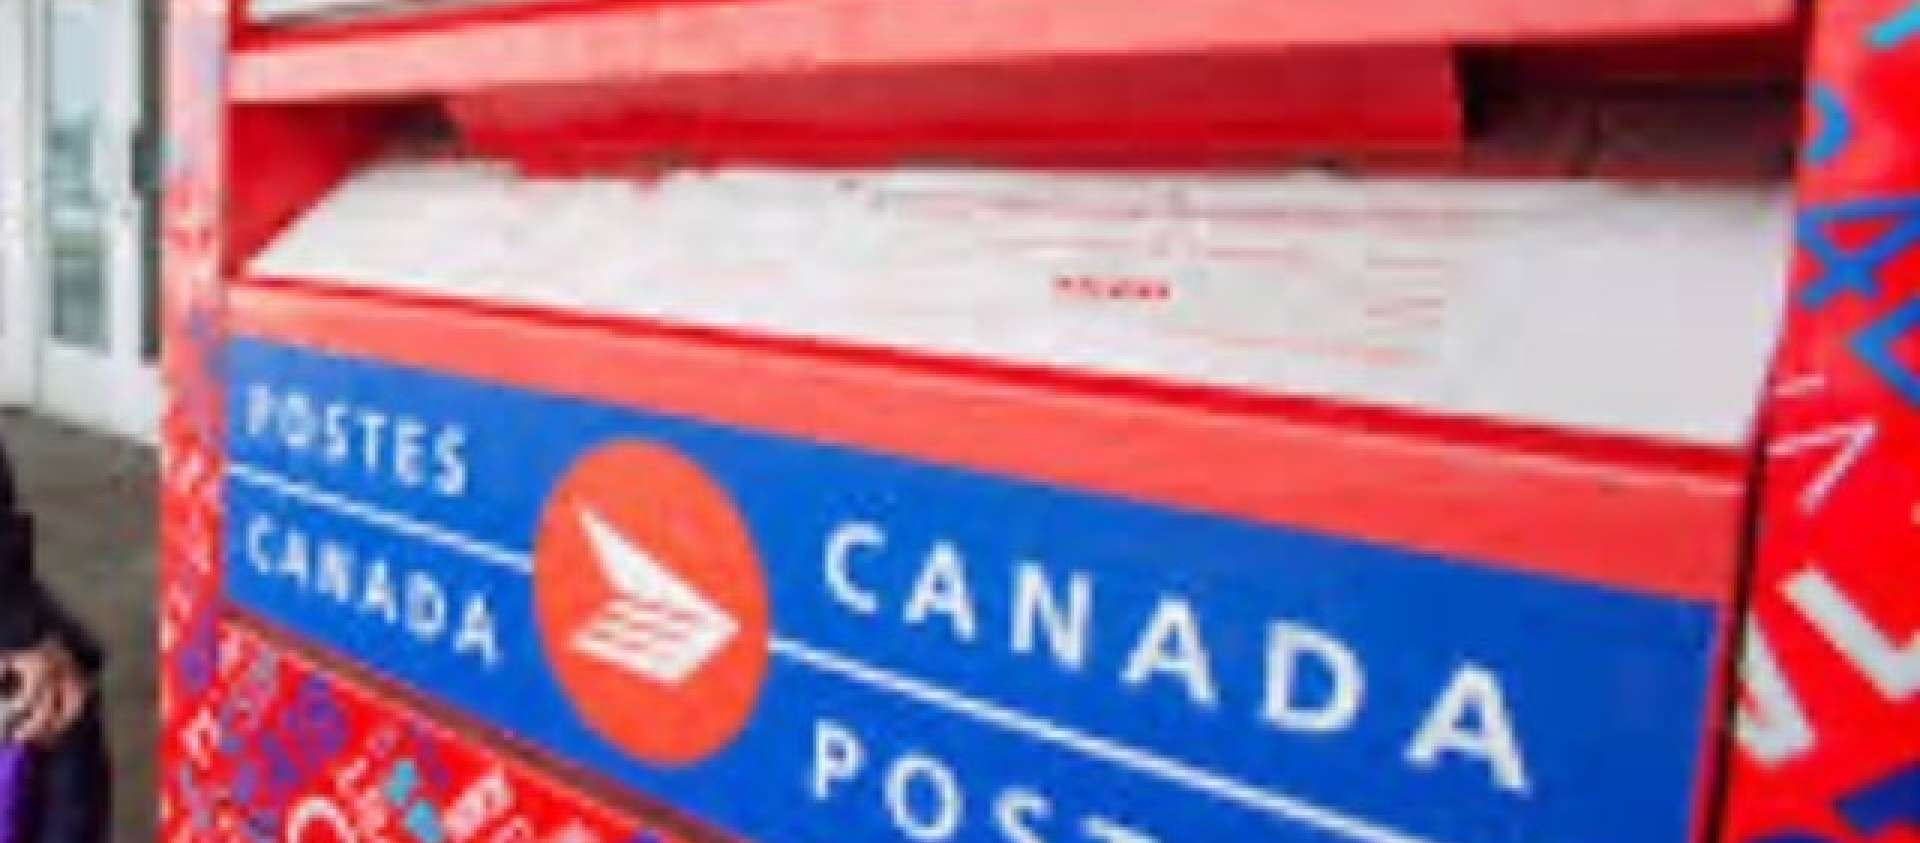 Image of Canada Post Box